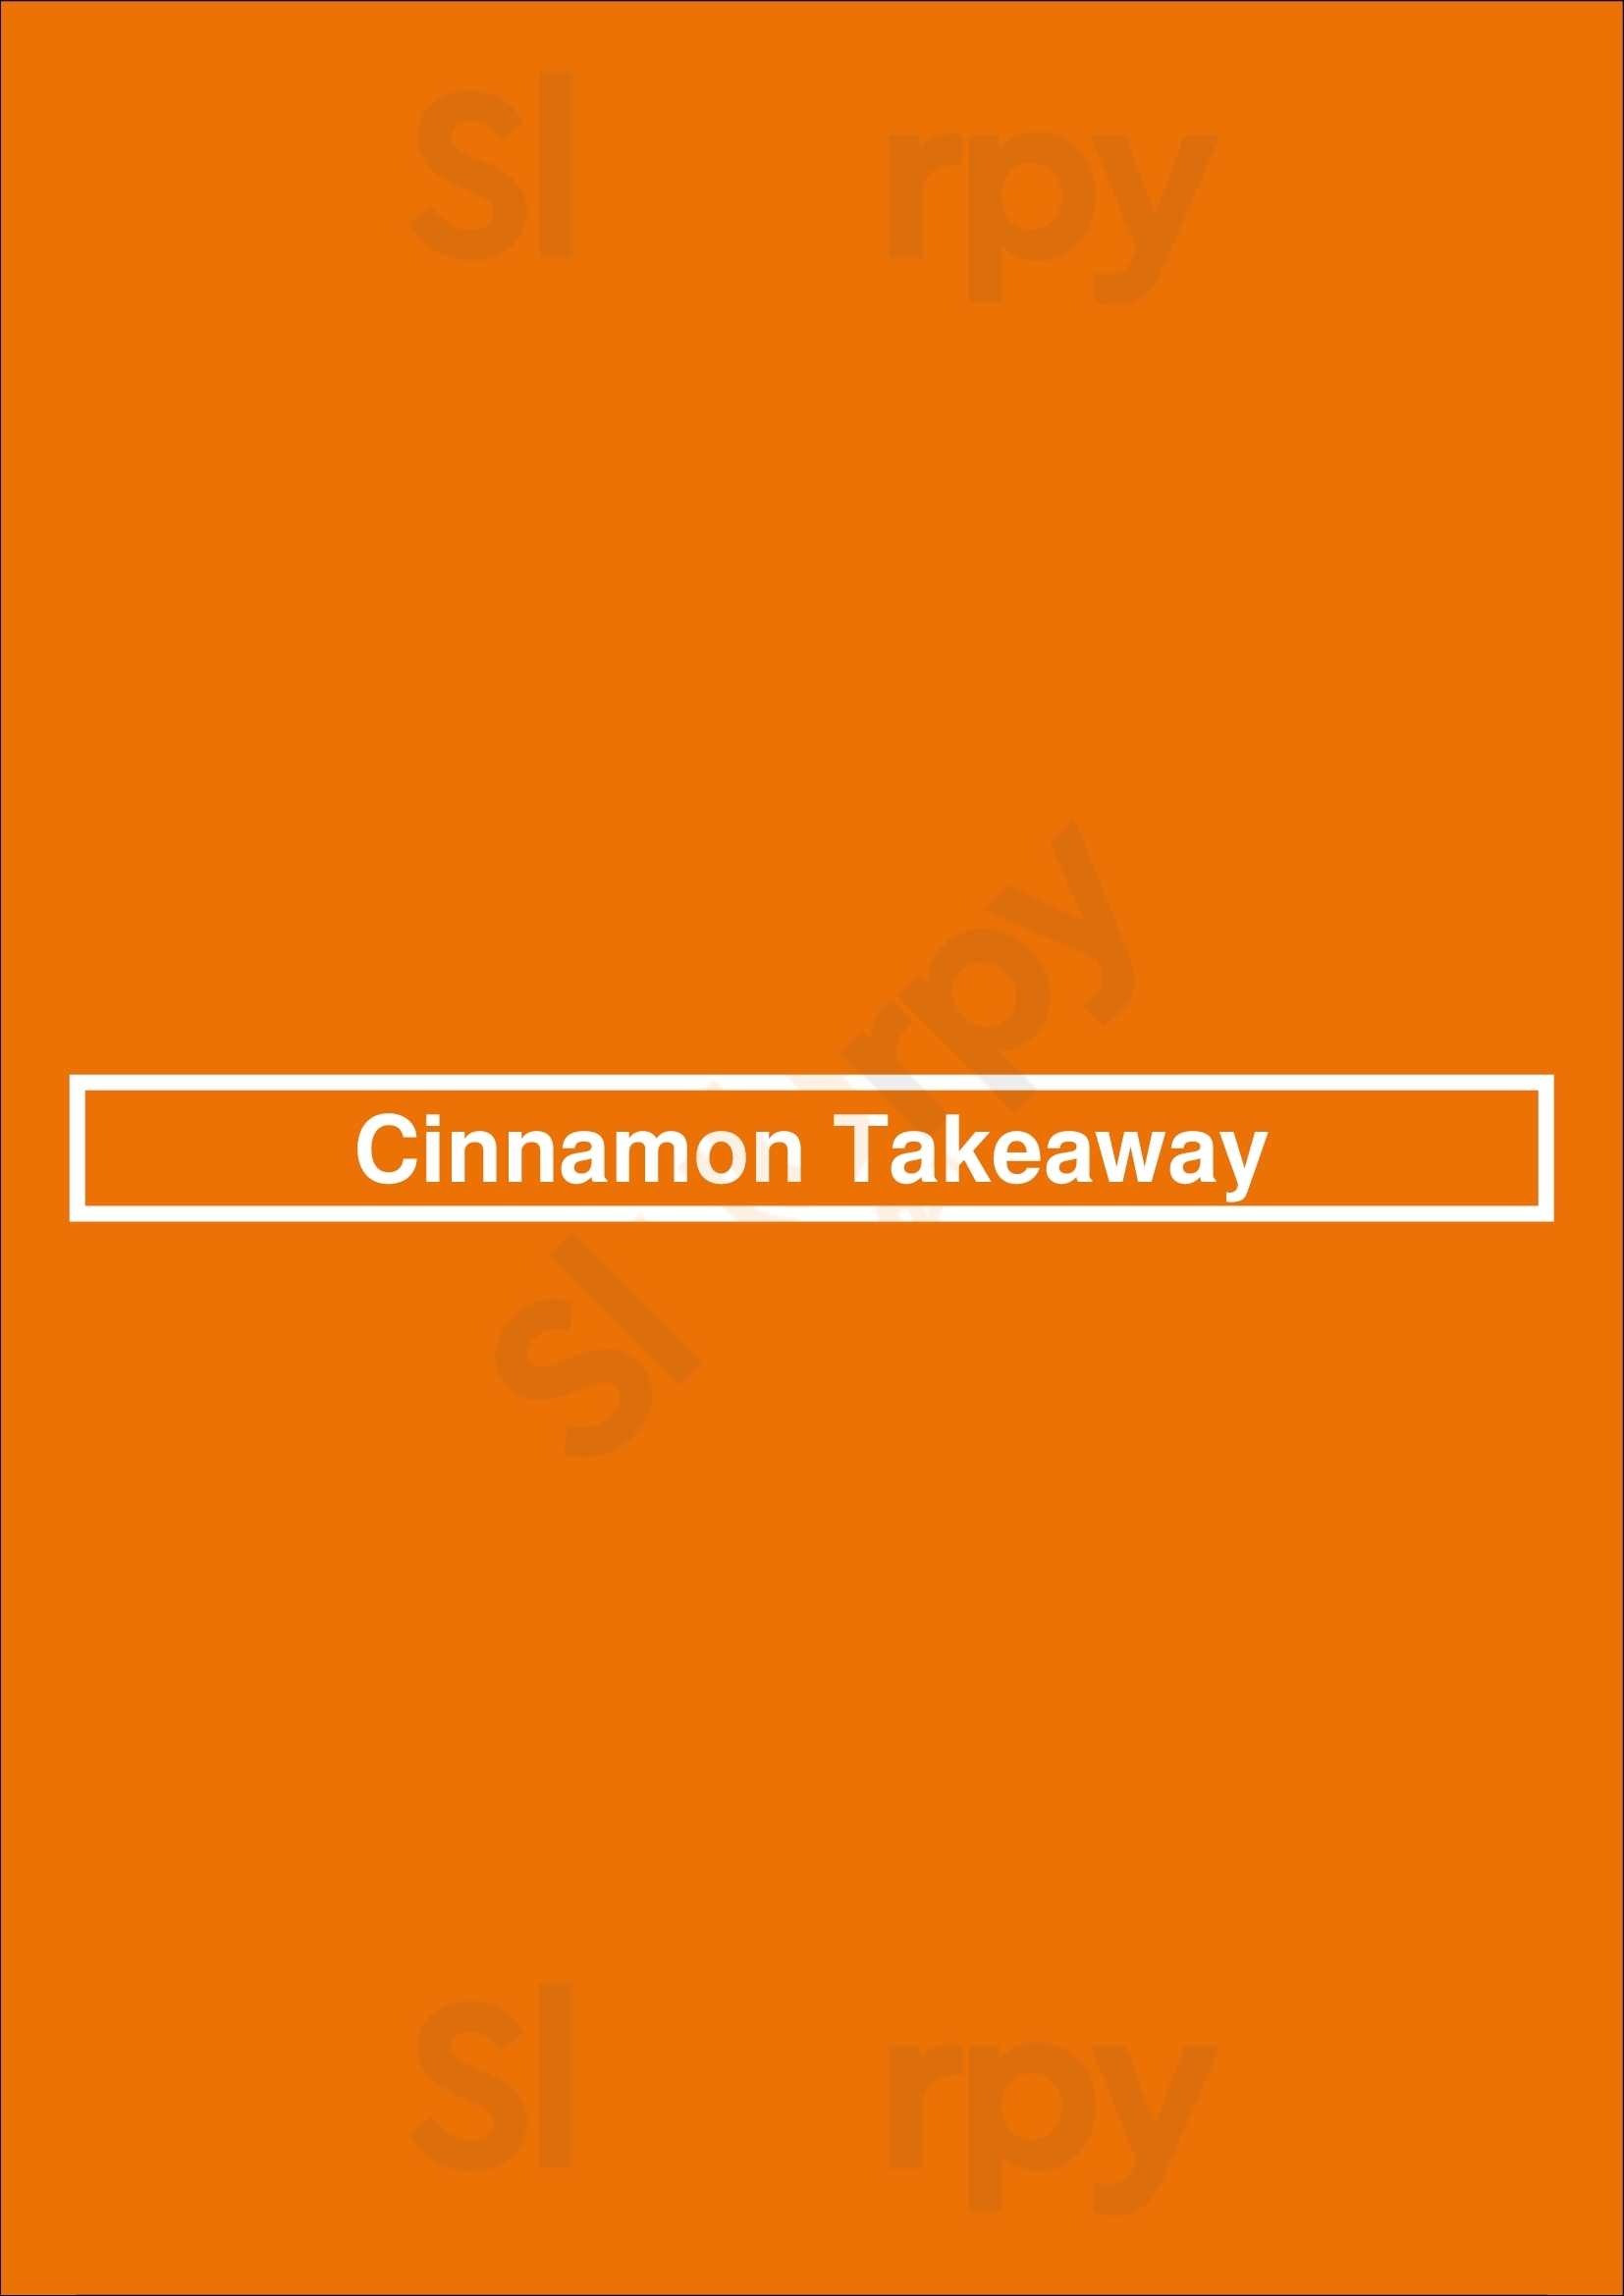 Cinnamon Canterbury Menu - 1